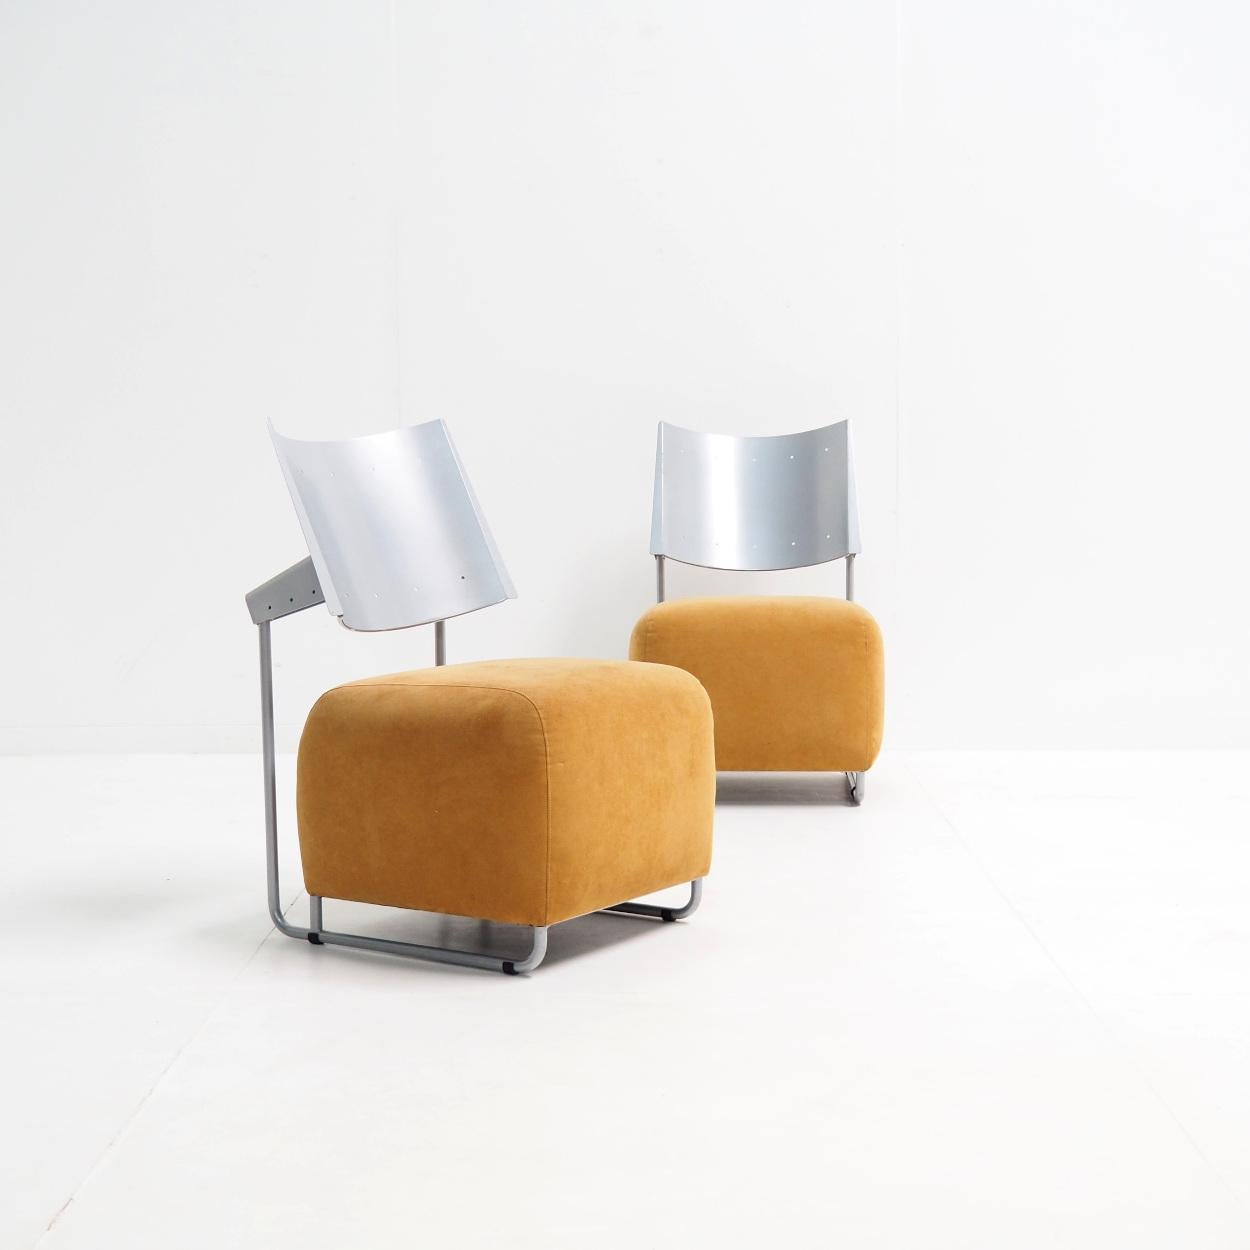 Late 20th Century ‘Oscar’ Chairs by Harri Korhonen for Inno Interior Oy, Finnish